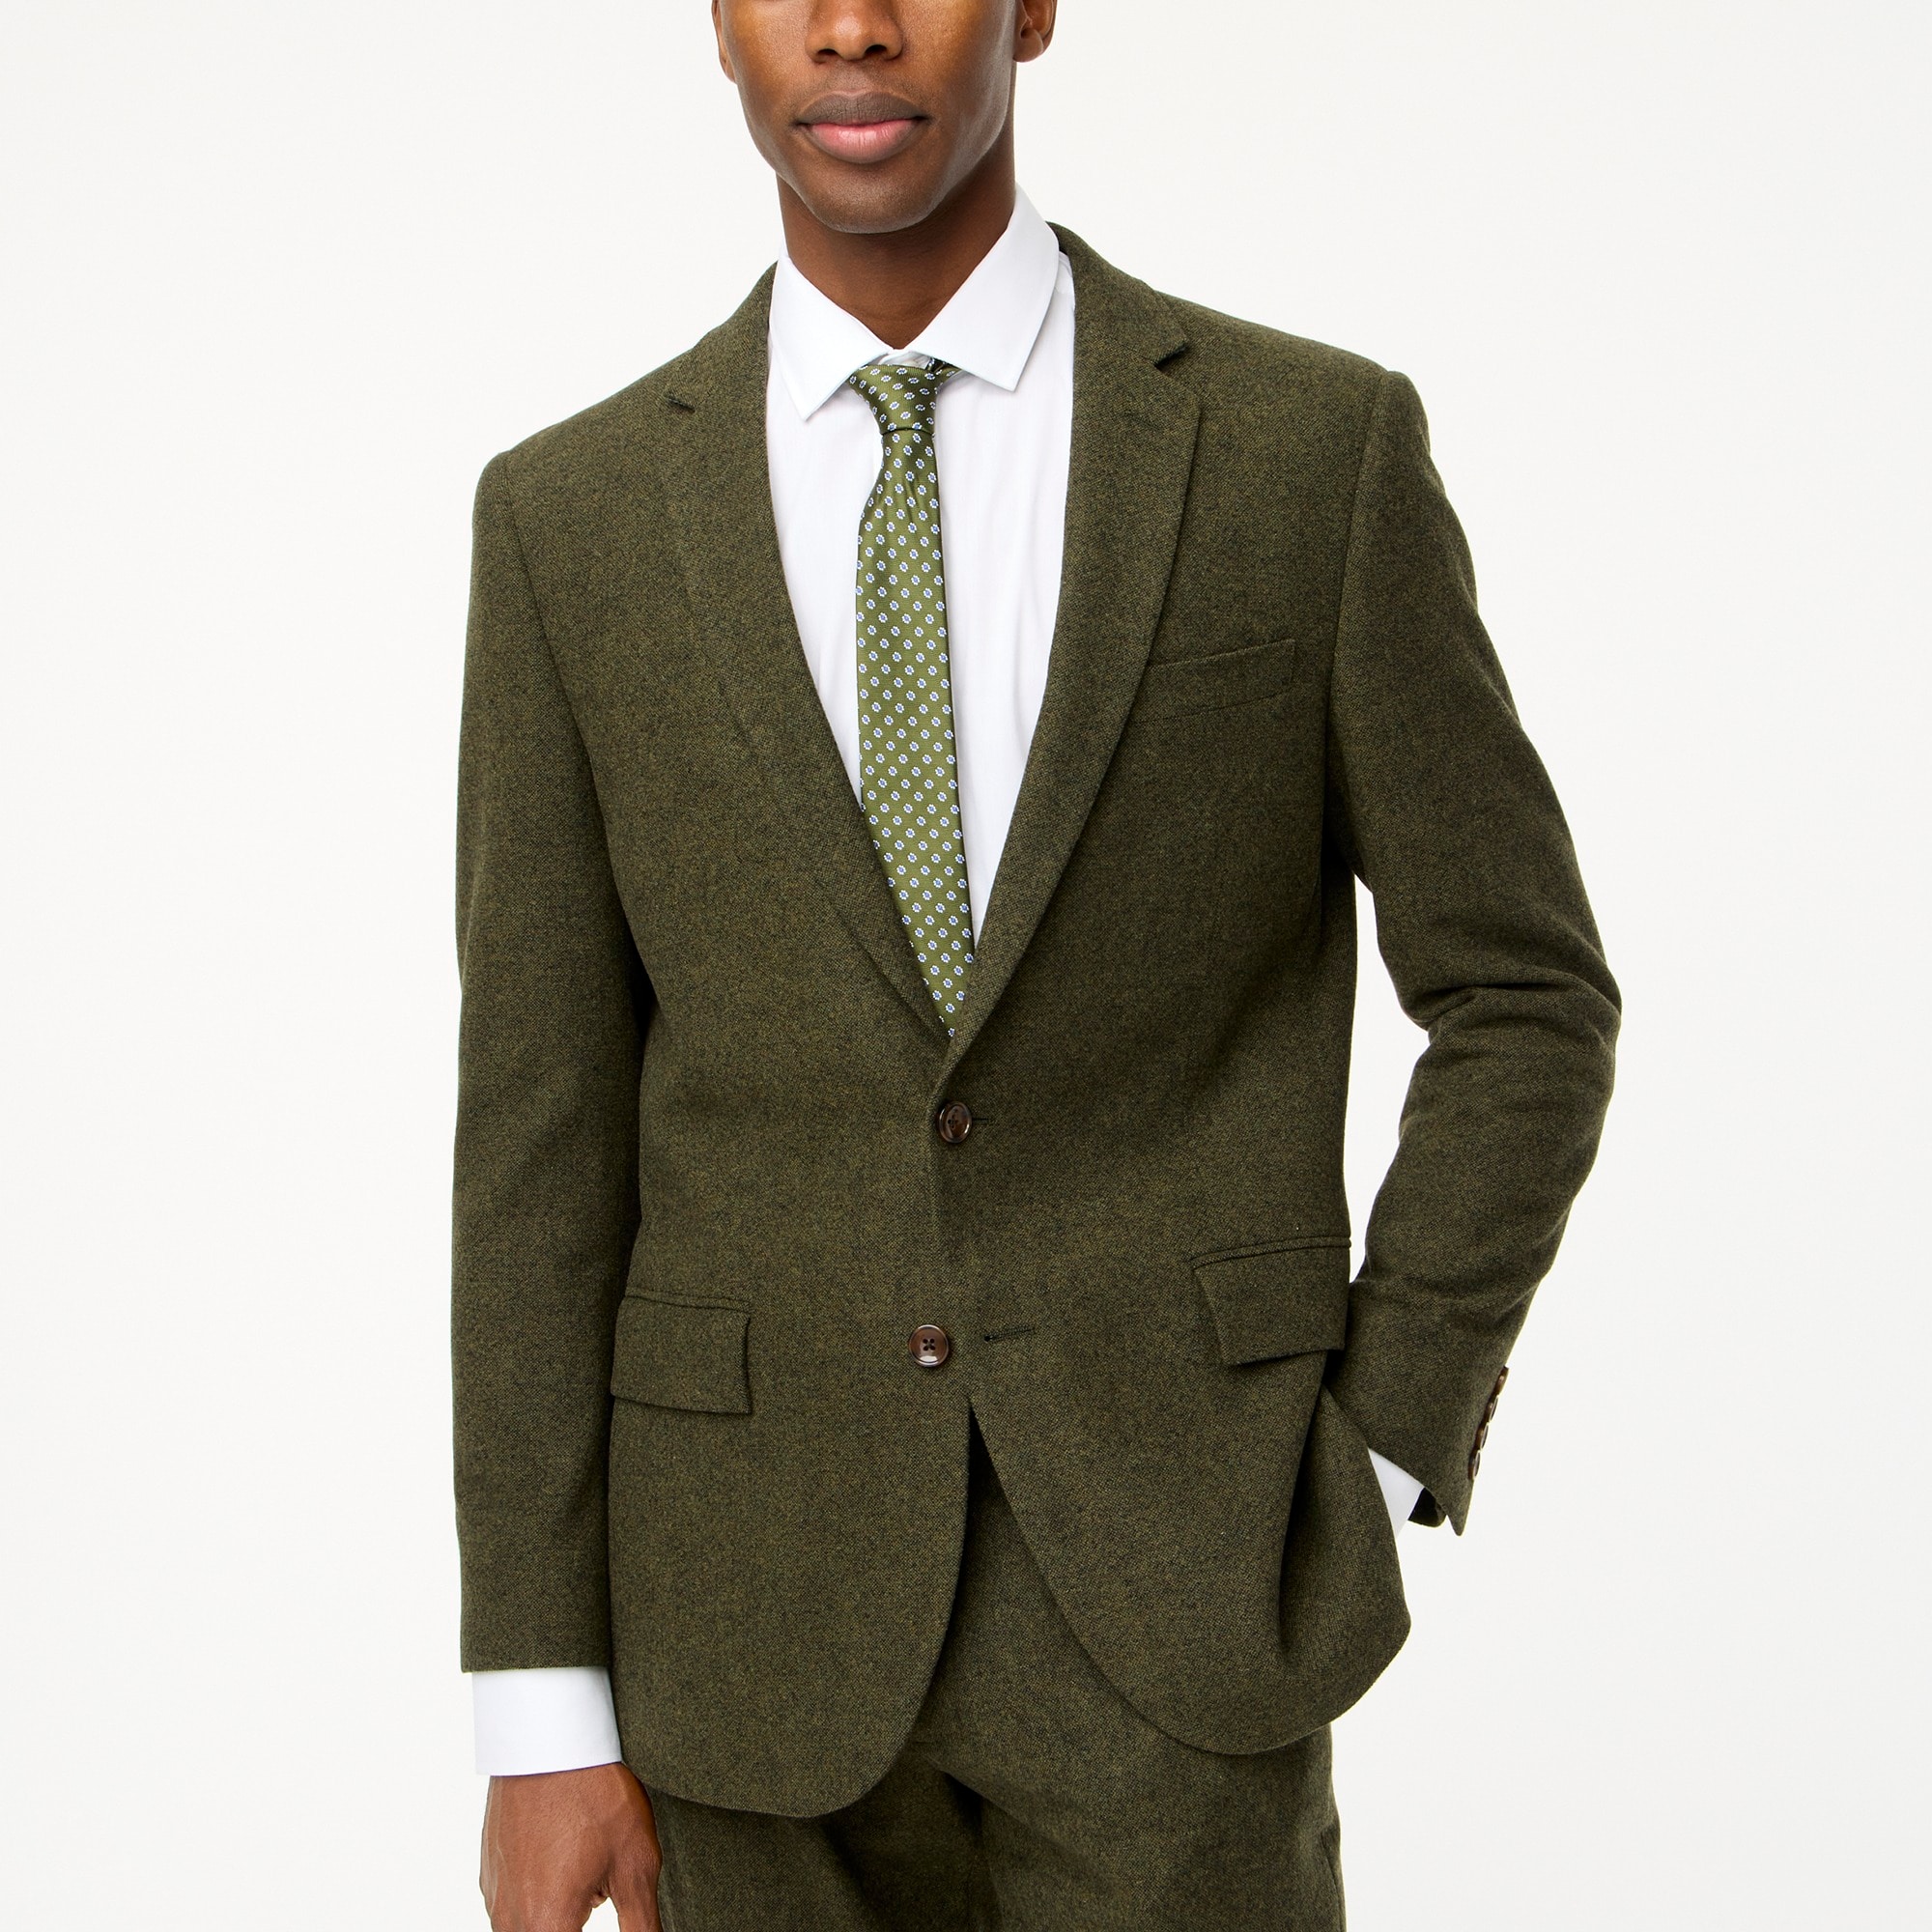 Jcrew Slim-fit Thompson suit jacket in donegal wool blend